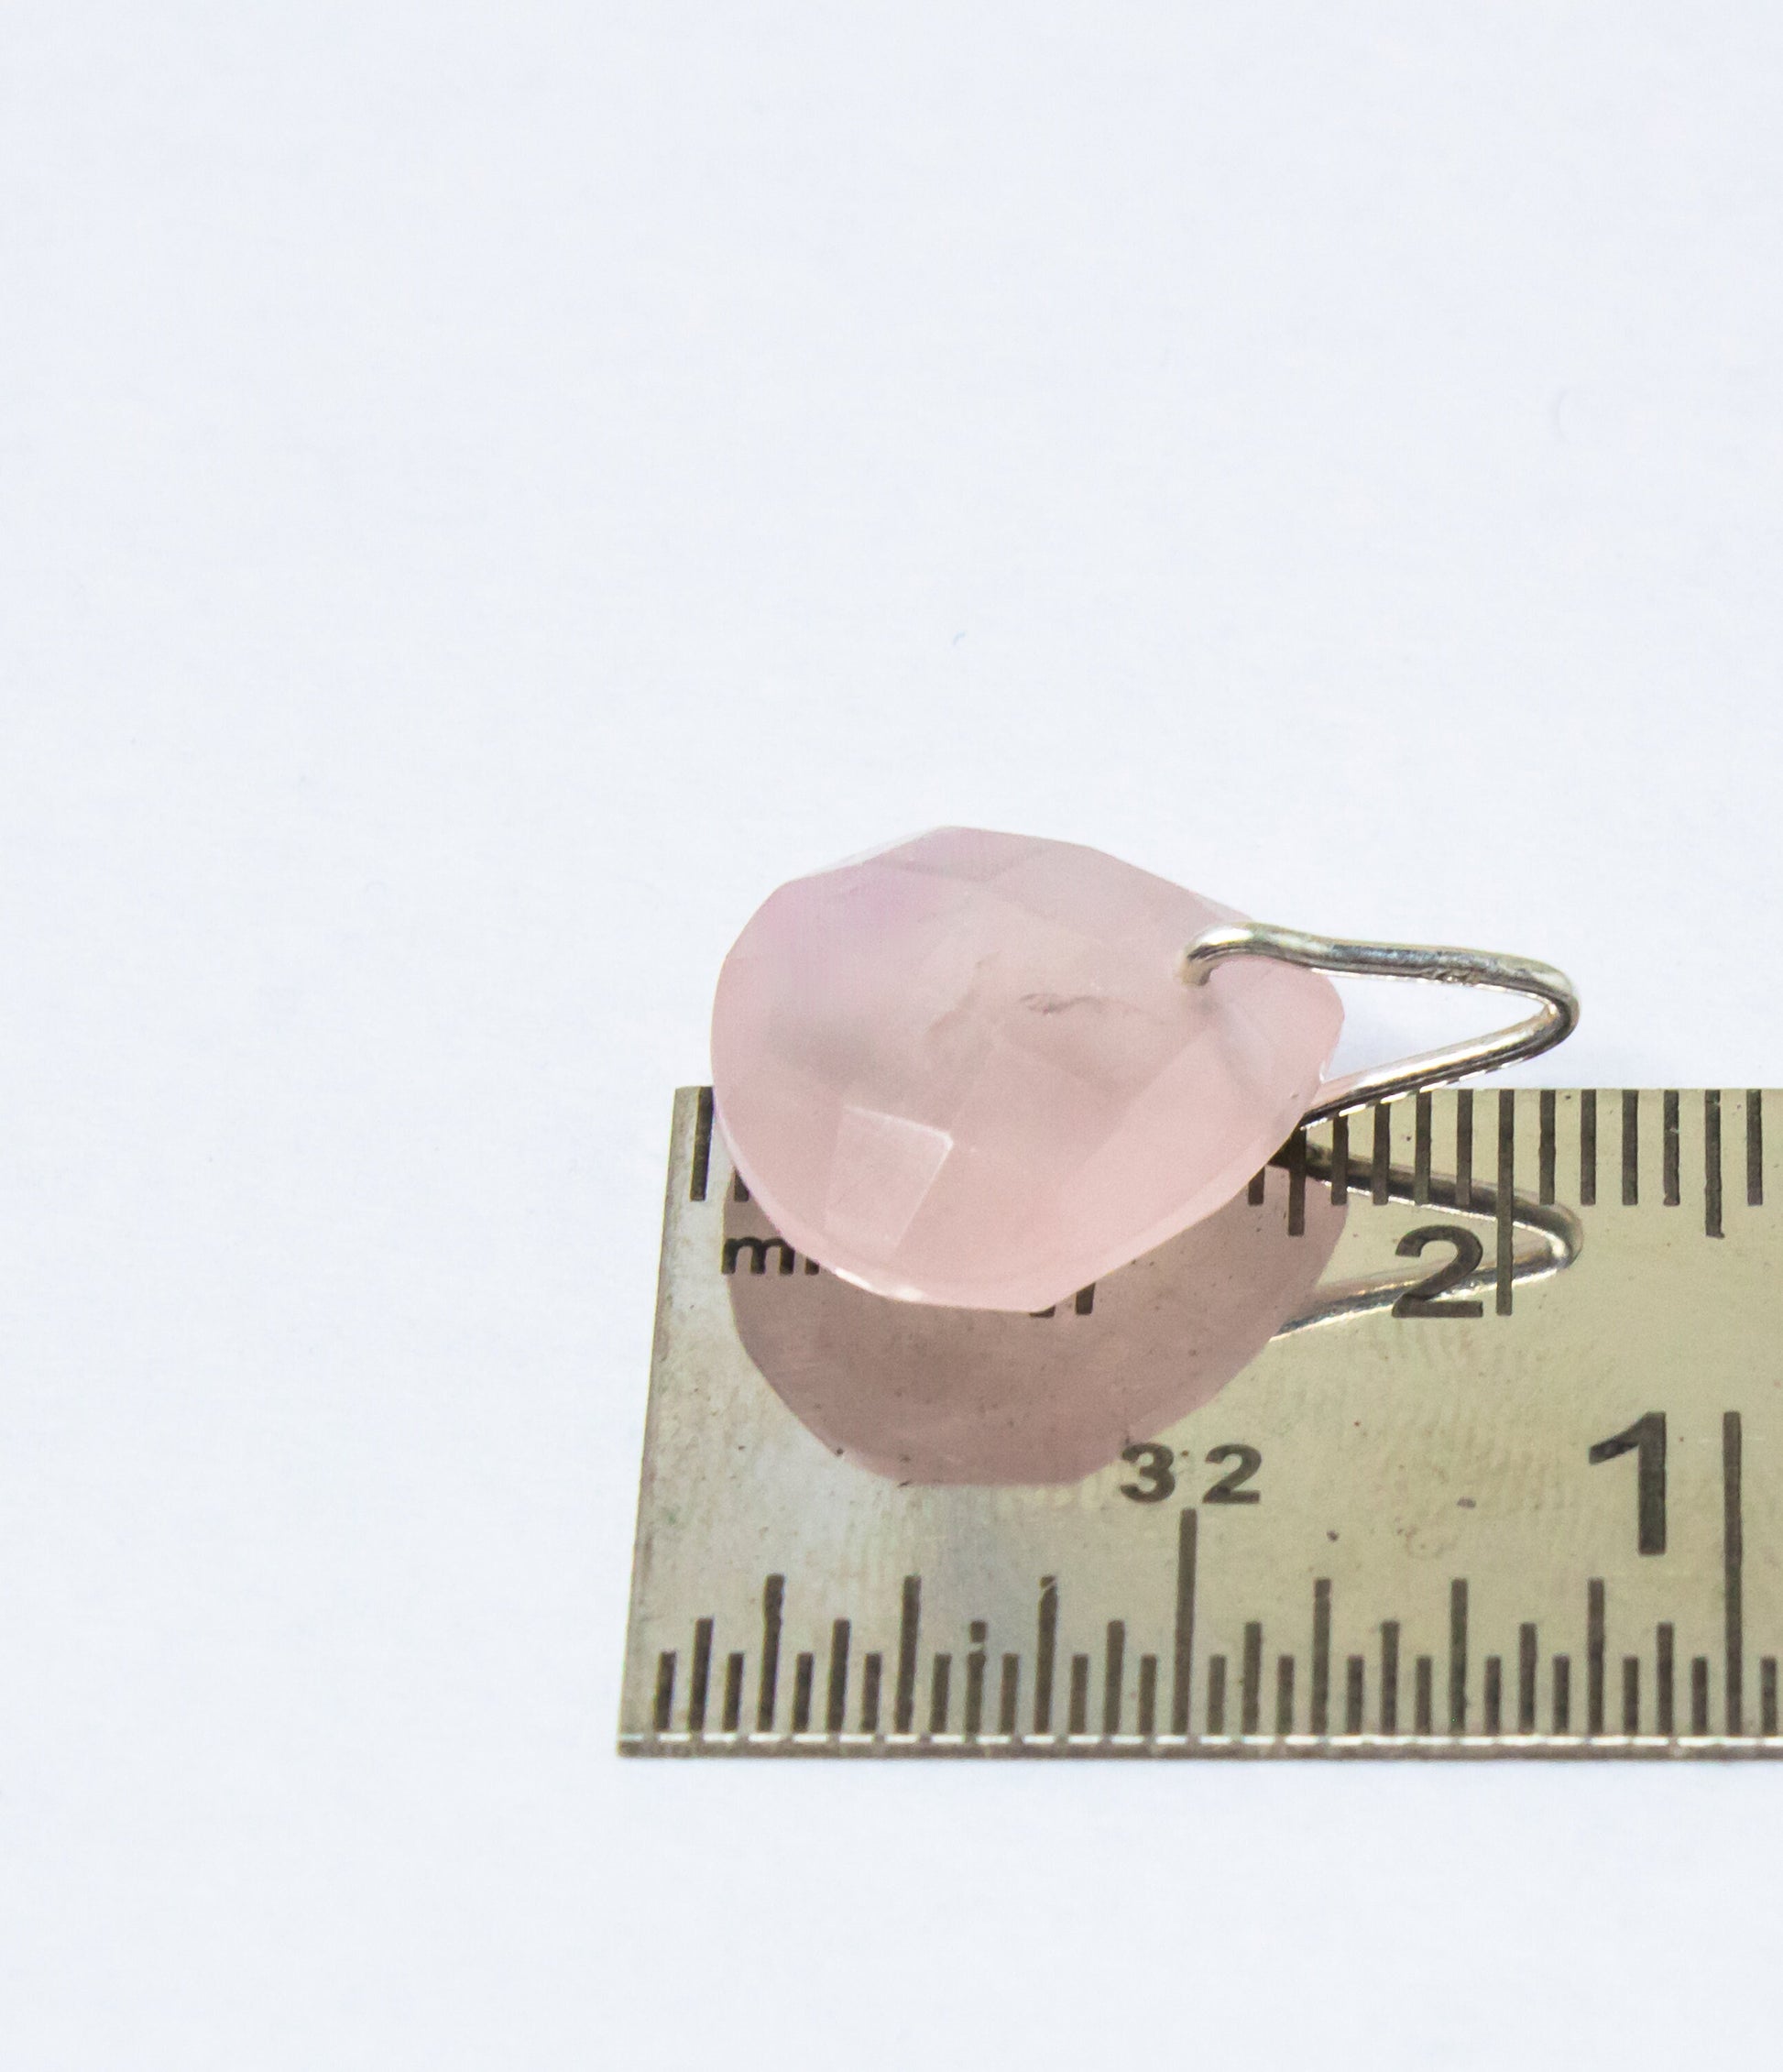 Genuine Rose QUARTZ Gem Simple Teardrop Shaped Pendant, Minimalist Pink Gemstone Pendant, Taurus Zodiac January Birthstone, Australia, Zorbajewellers